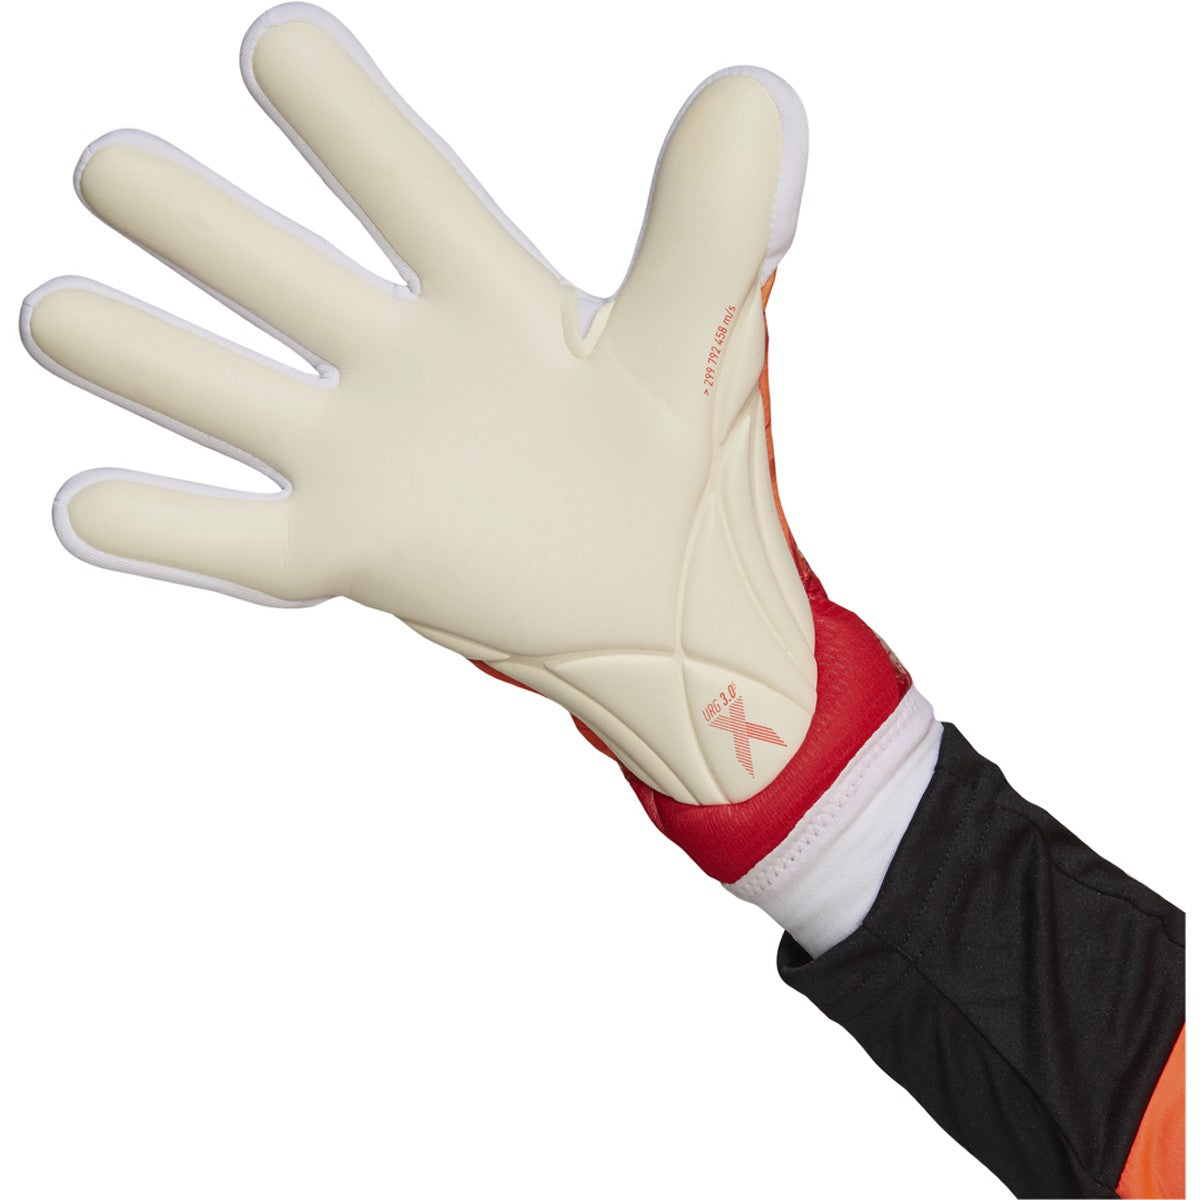 adidas Predator Pro GL Goalkeeper Gloves